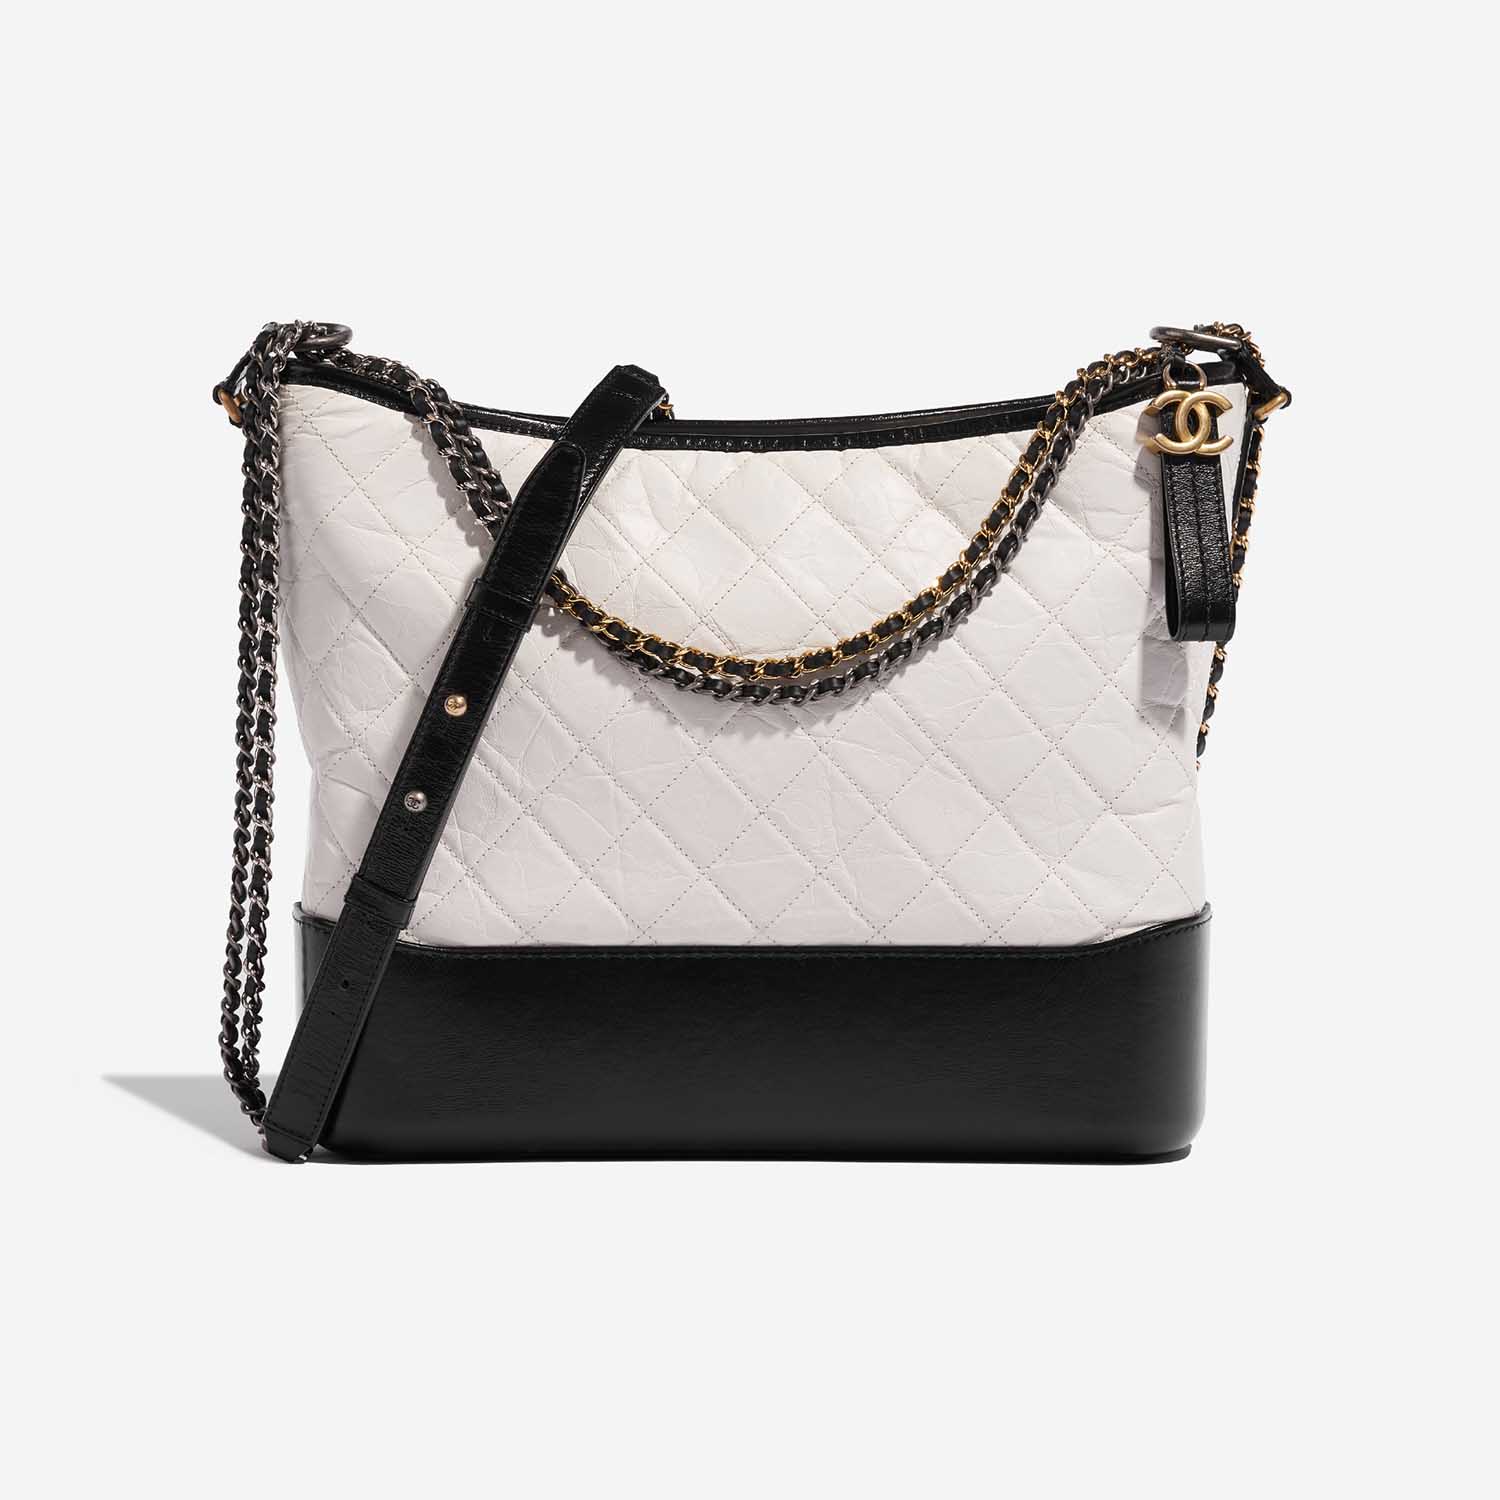 Chanel White and Black Medium Gabrielle Bag in Aged Calfskin